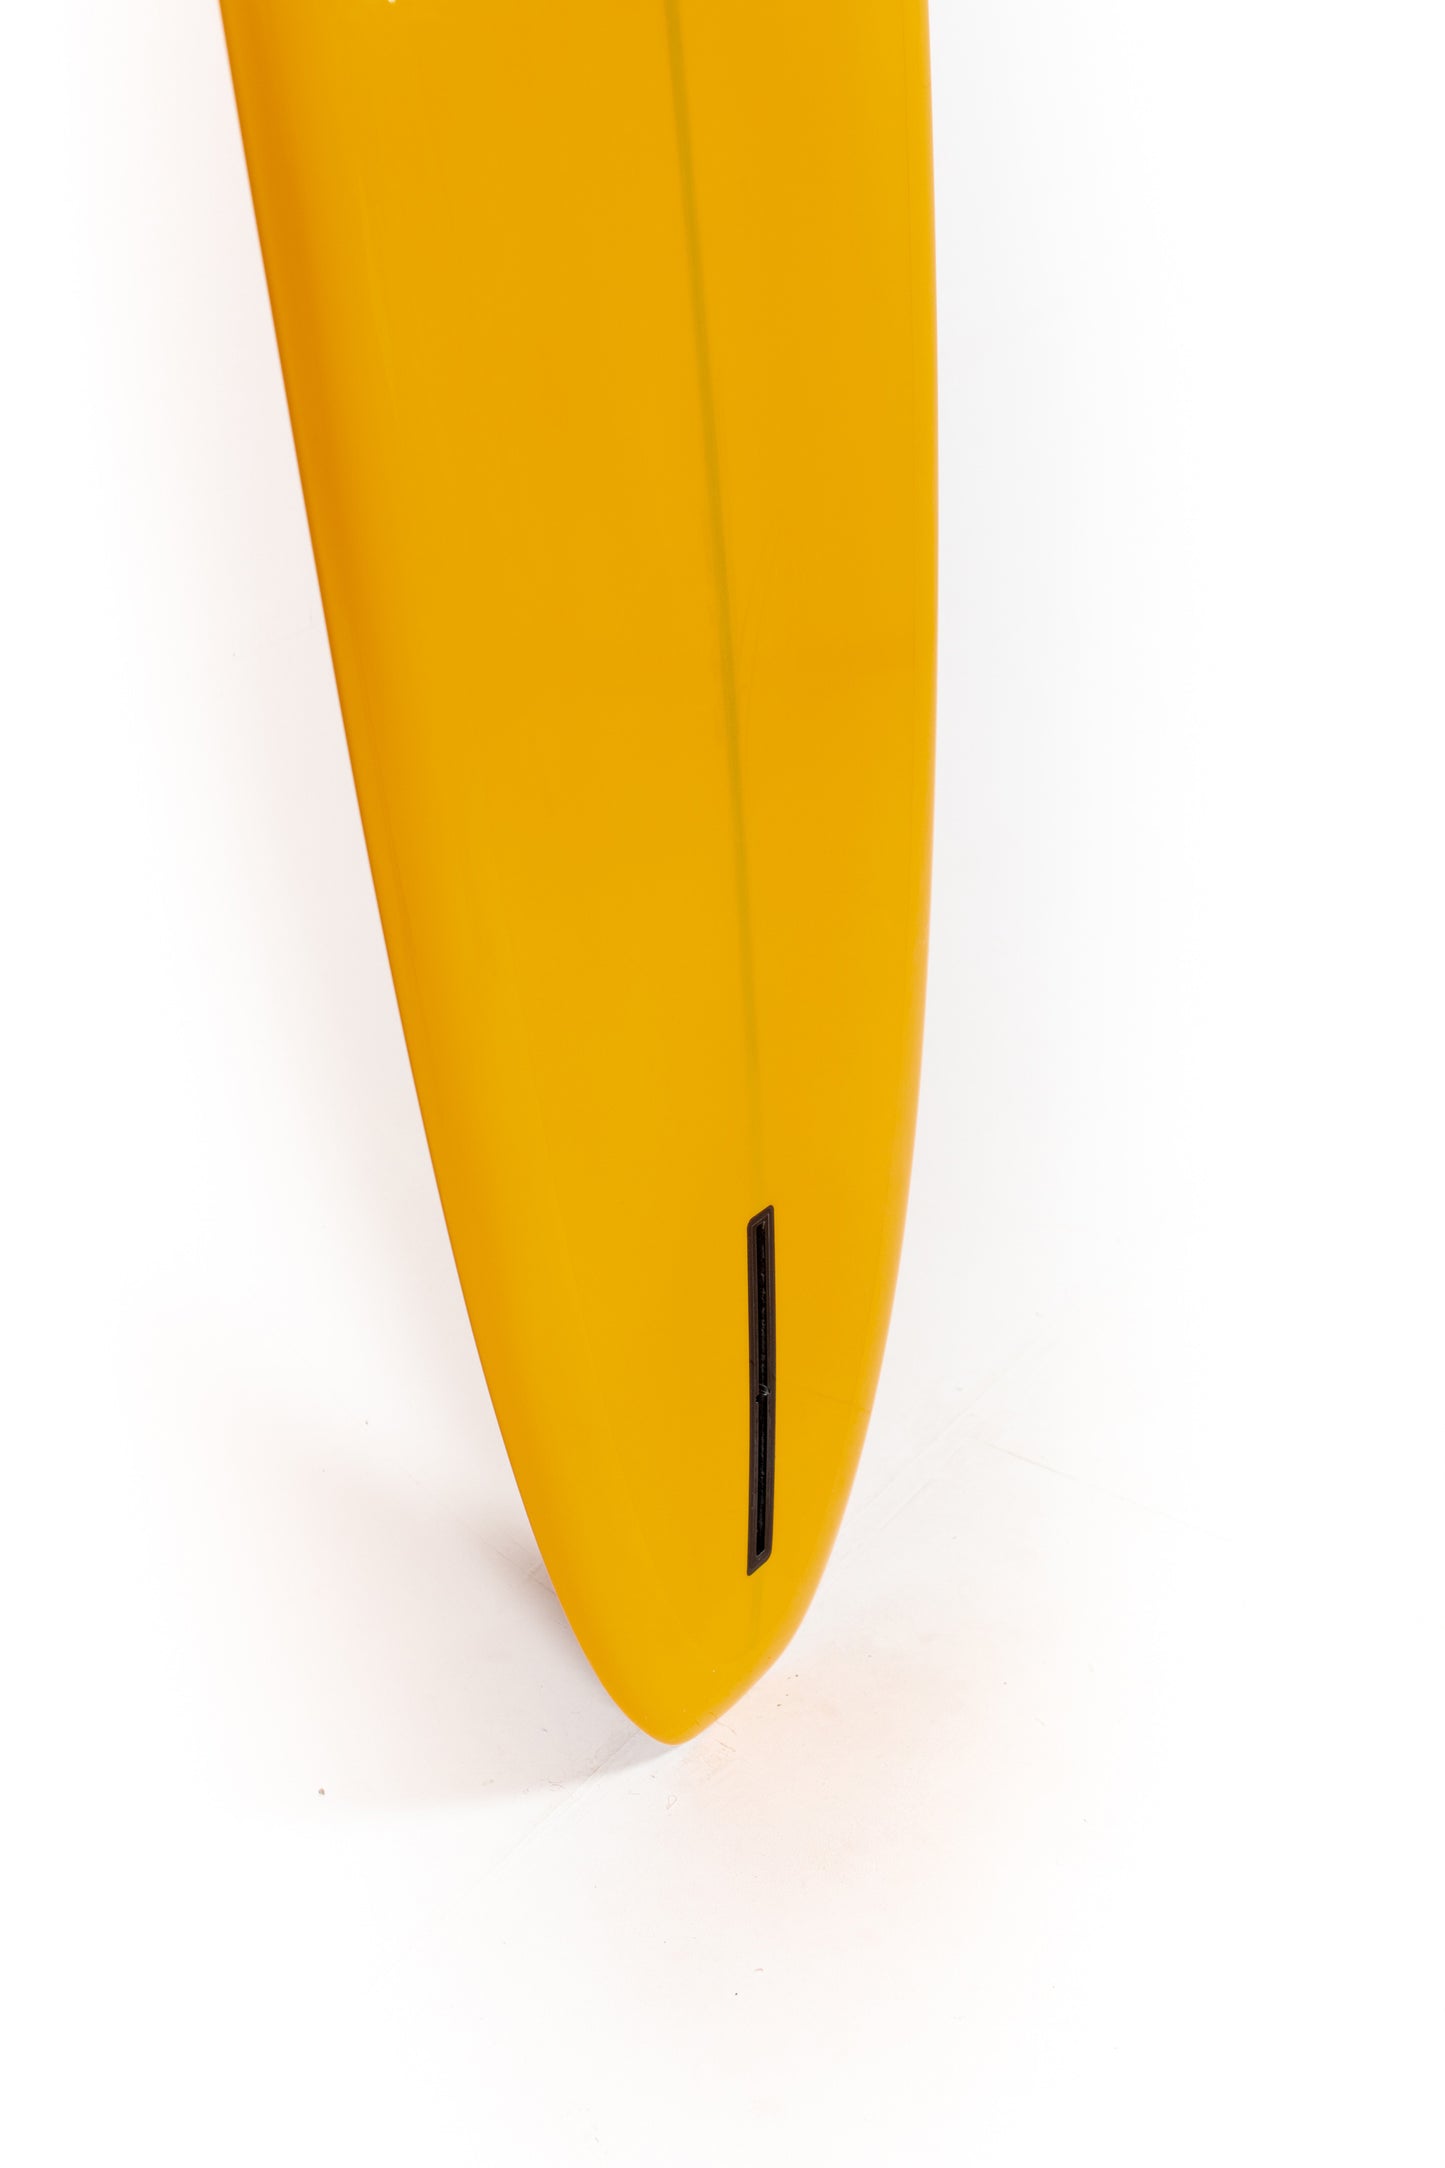 
                  
                    Pukas Surf Shop - Christenson Surfboard  - BANDITO by Chris Christenson - 9'6” x 23 x 3 - CX0313
                  
                